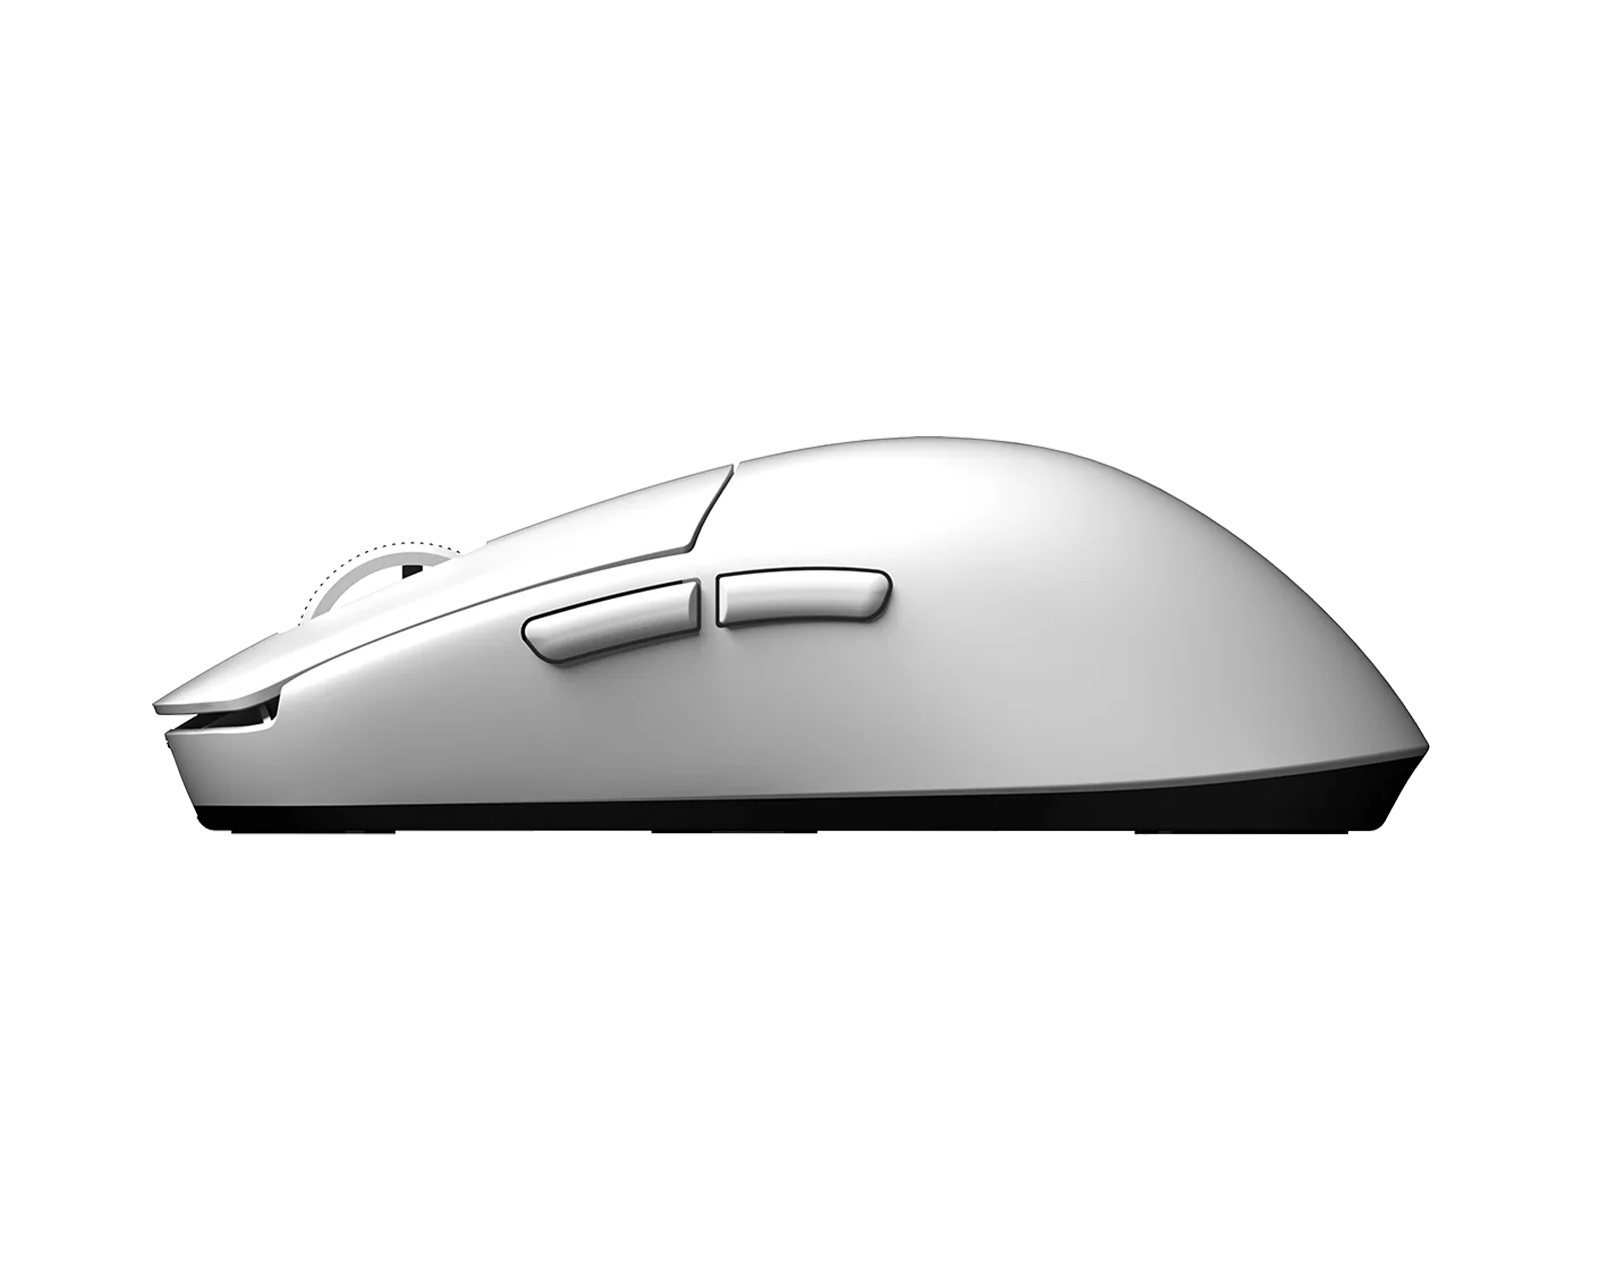 Ninjutso Sora Superlight Wireless Gaming Mouse - White - us 